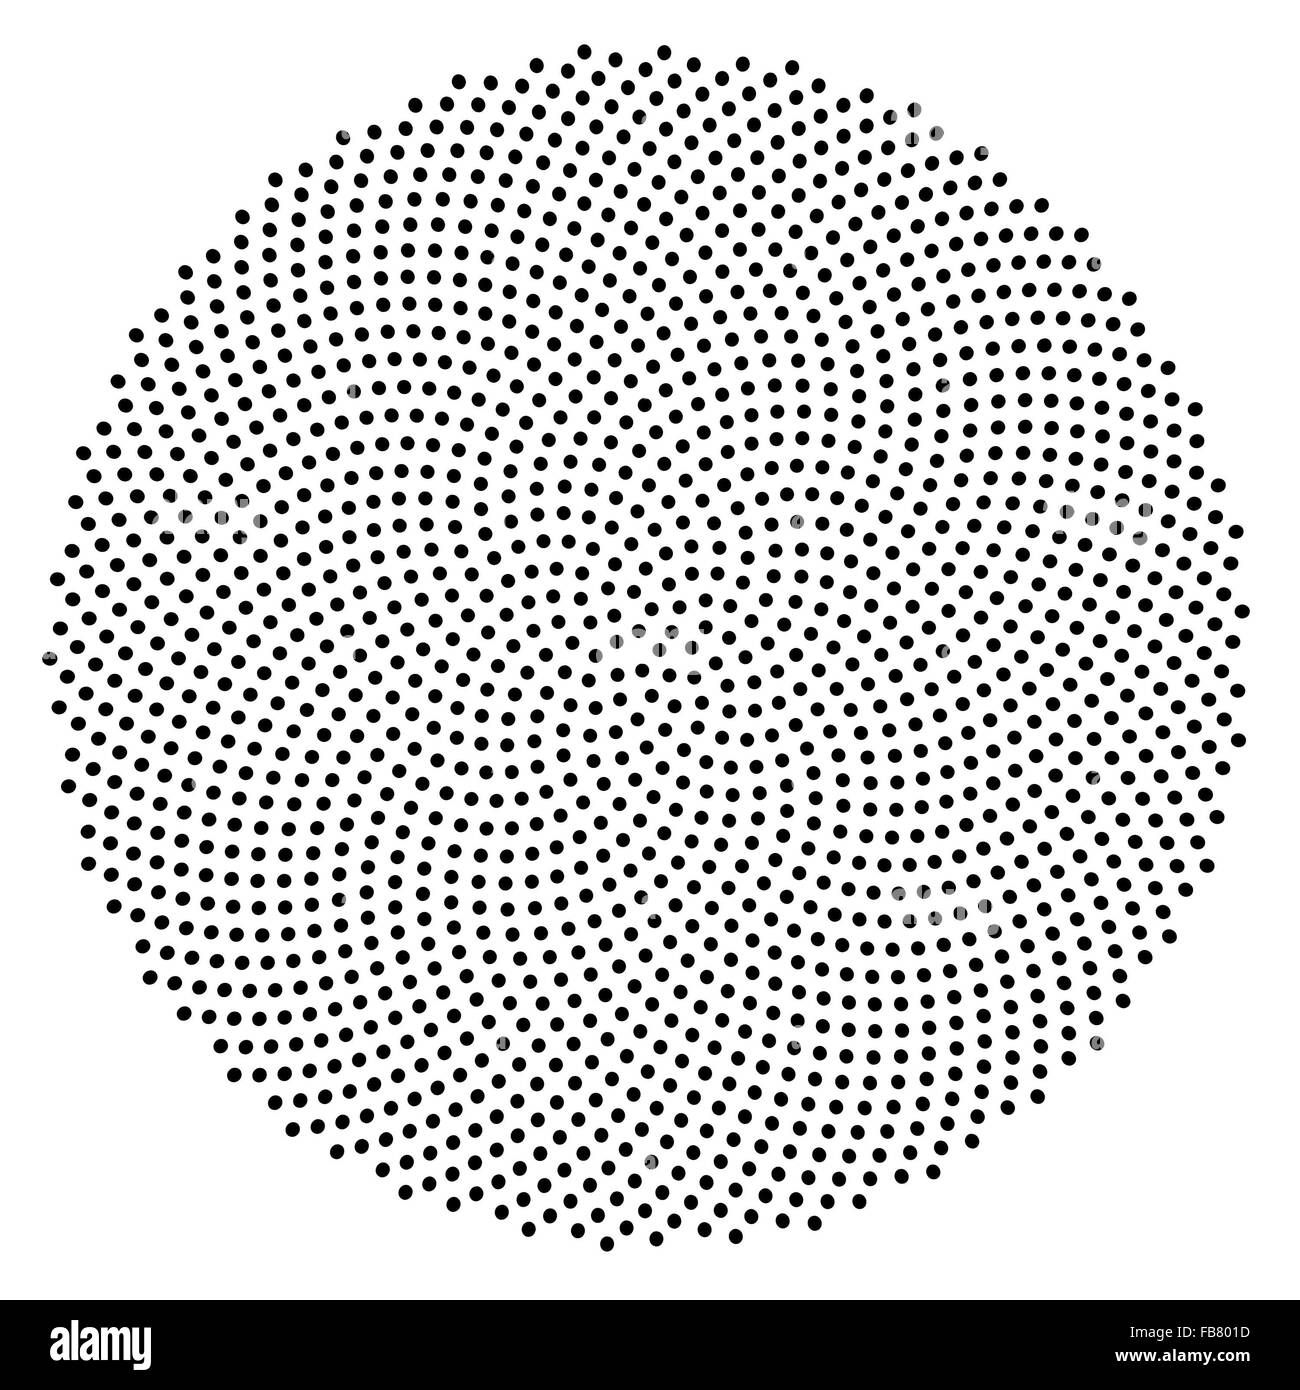 Royalty free clipart illustration of a black fibonacci golden ratio mathematics dot pattern, on a white background. Stock Photo